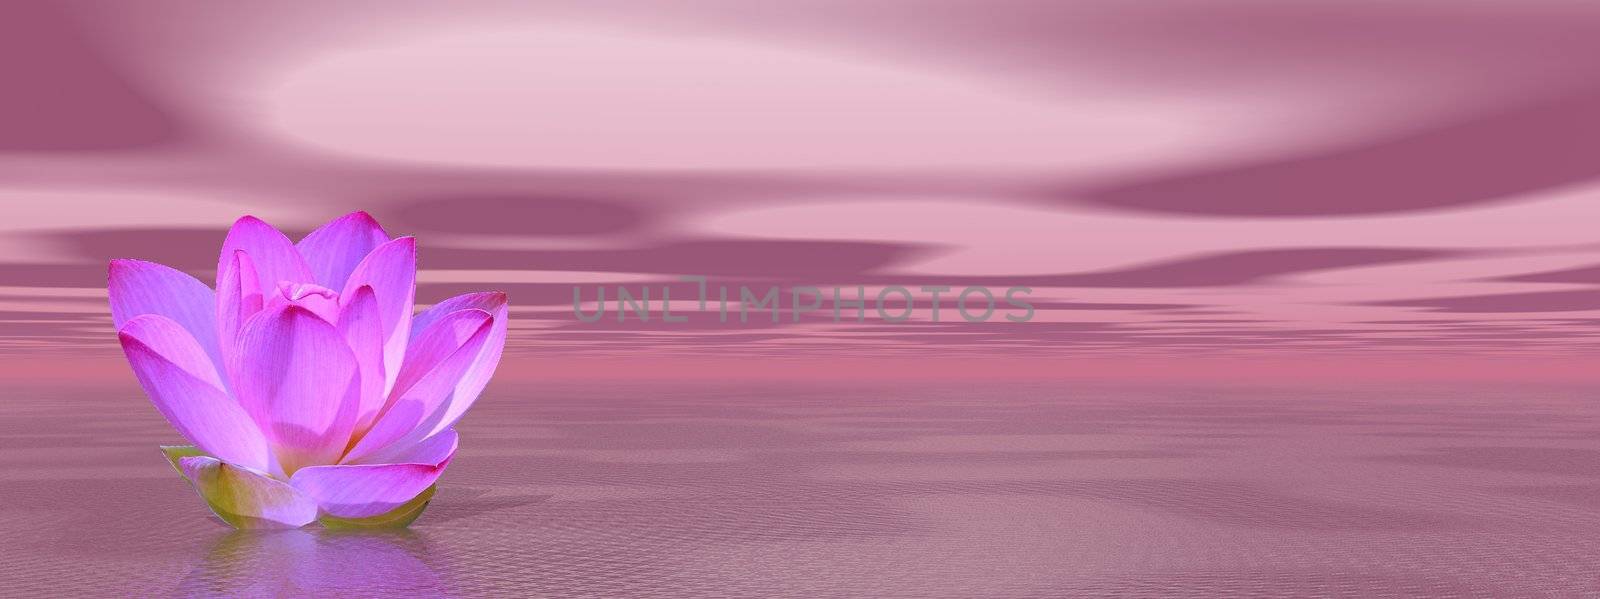 Lily flower in violet ocean by Elenaphotos21